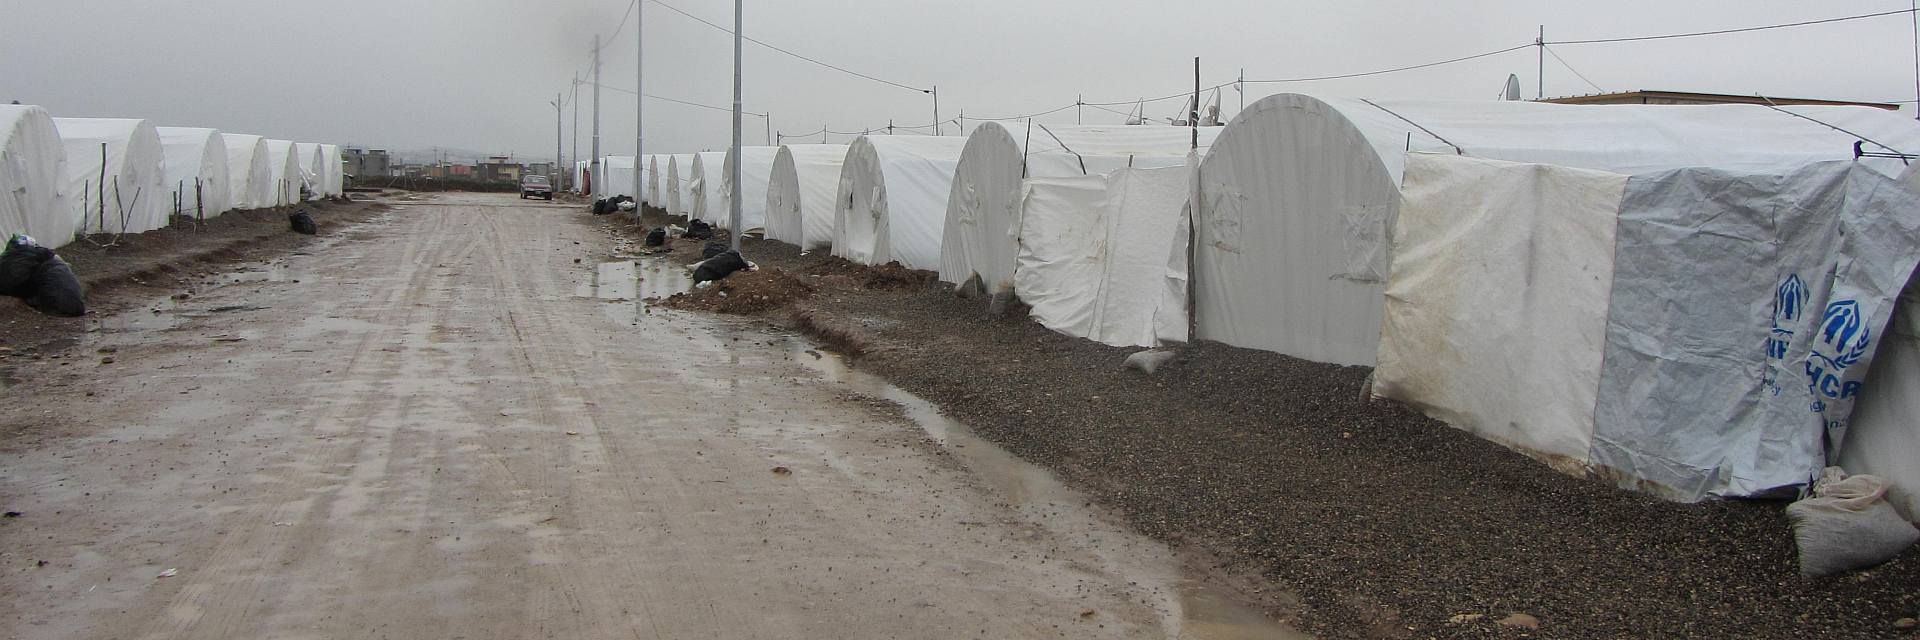 Flüchtlingslager im Nord-Irak